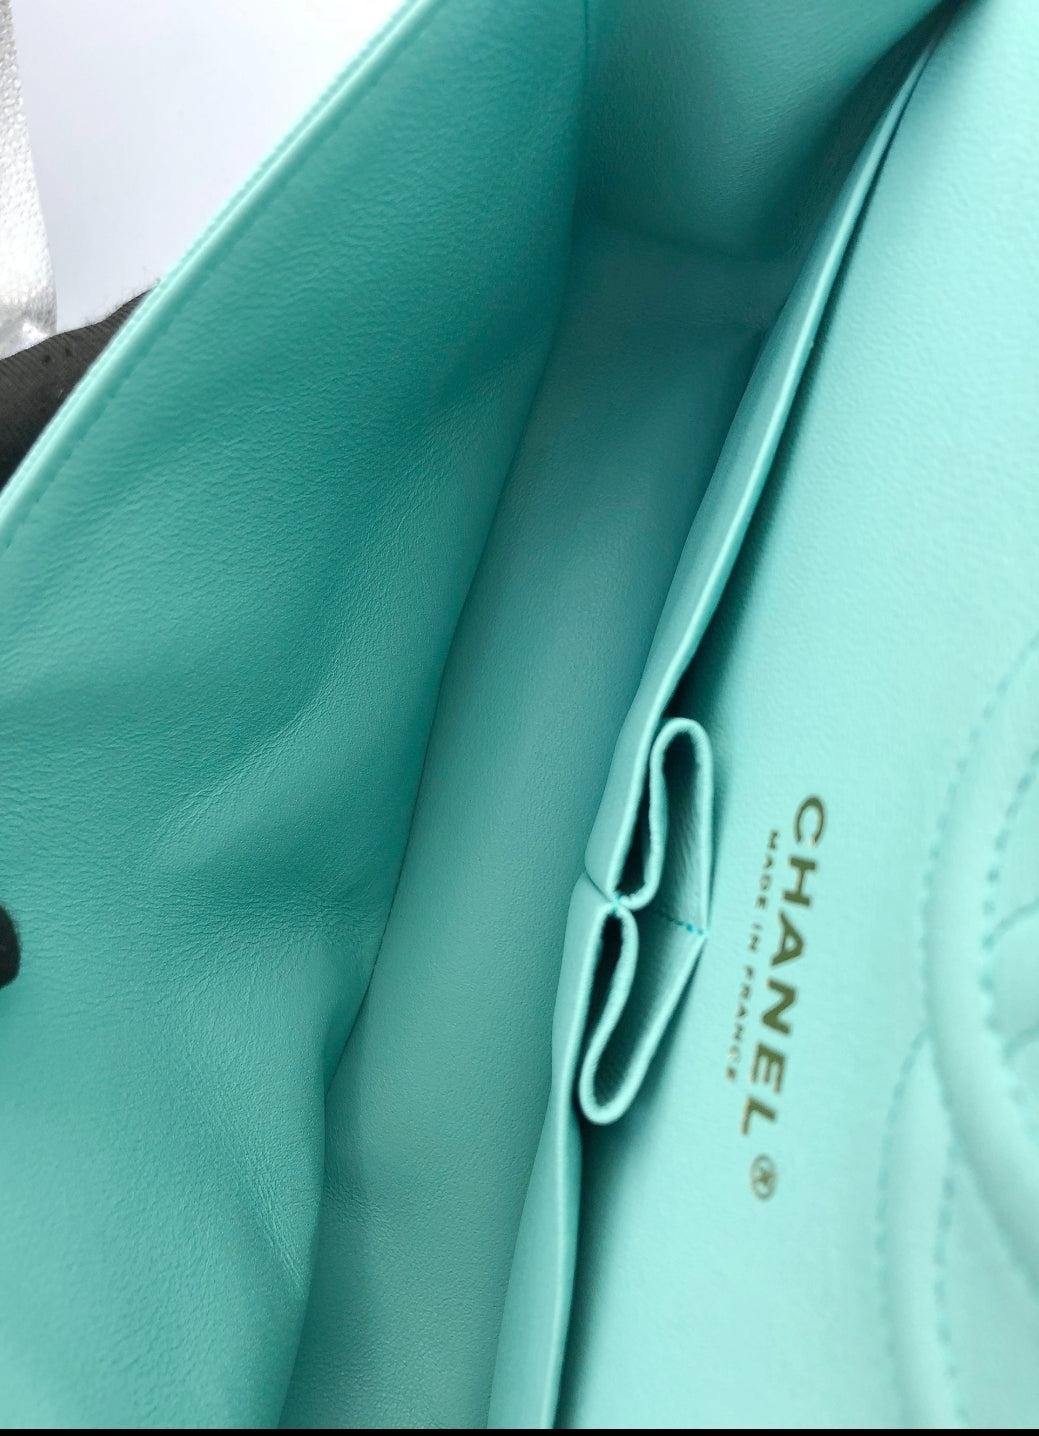 Chanel Classic Medium Flap 19C Tiffany Blue